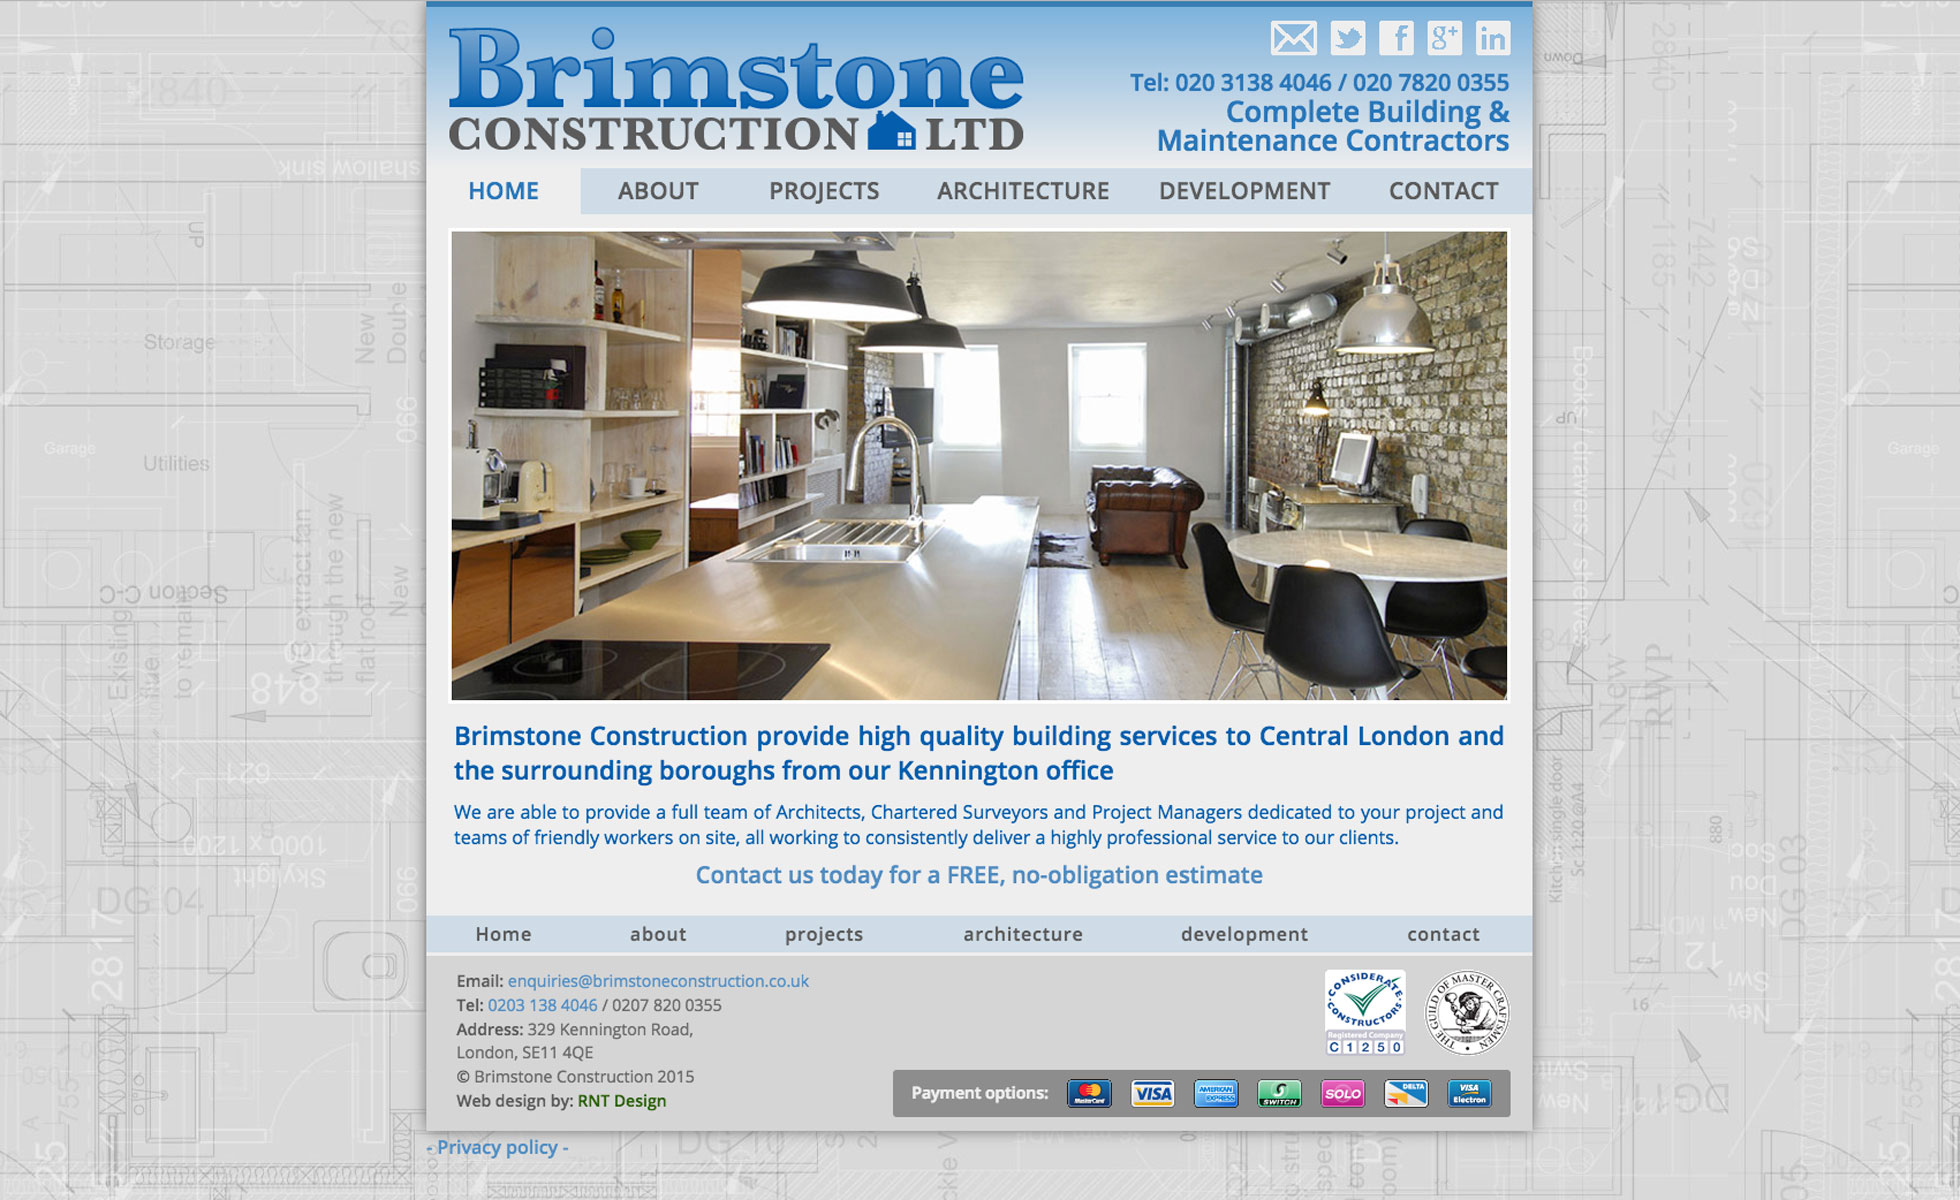 brimstone website image 3